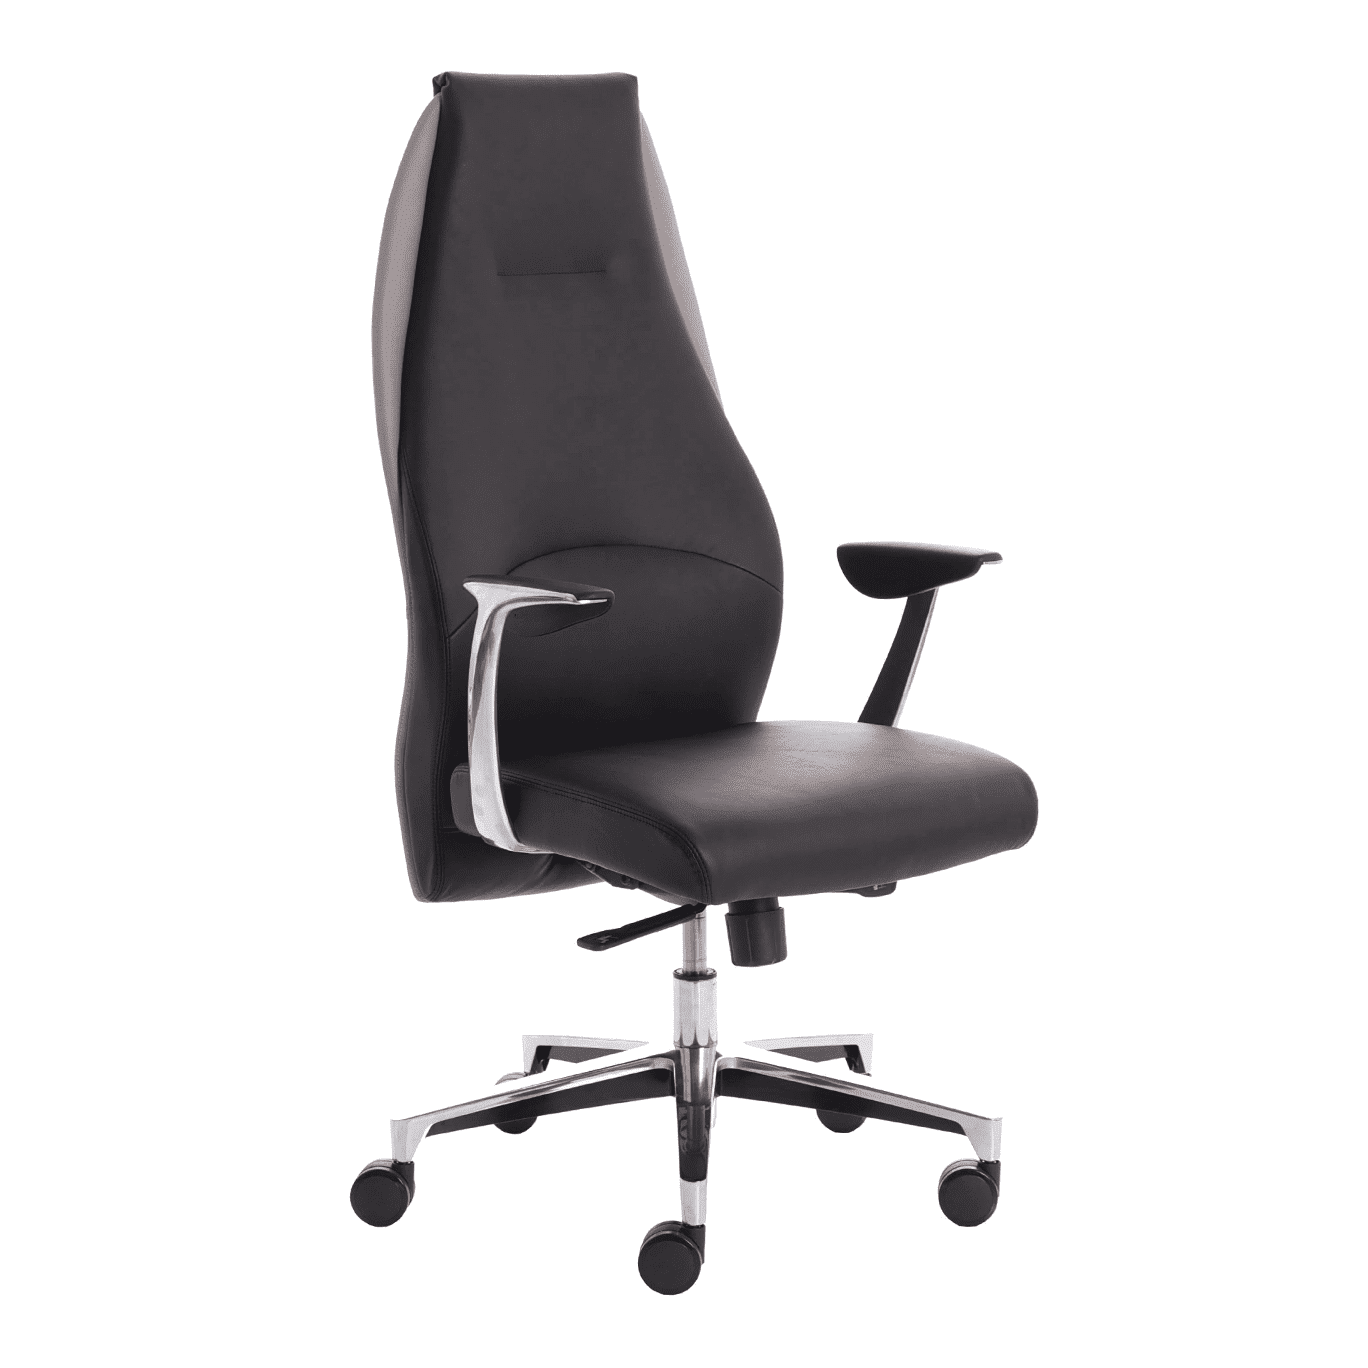 Mien High Back Leather Executive Office Chair - Soft Bonded, Chrome Frame, 125kg Capacity, 8hr Usage, 5yr Mechanism & 2yr Fabric Warranty